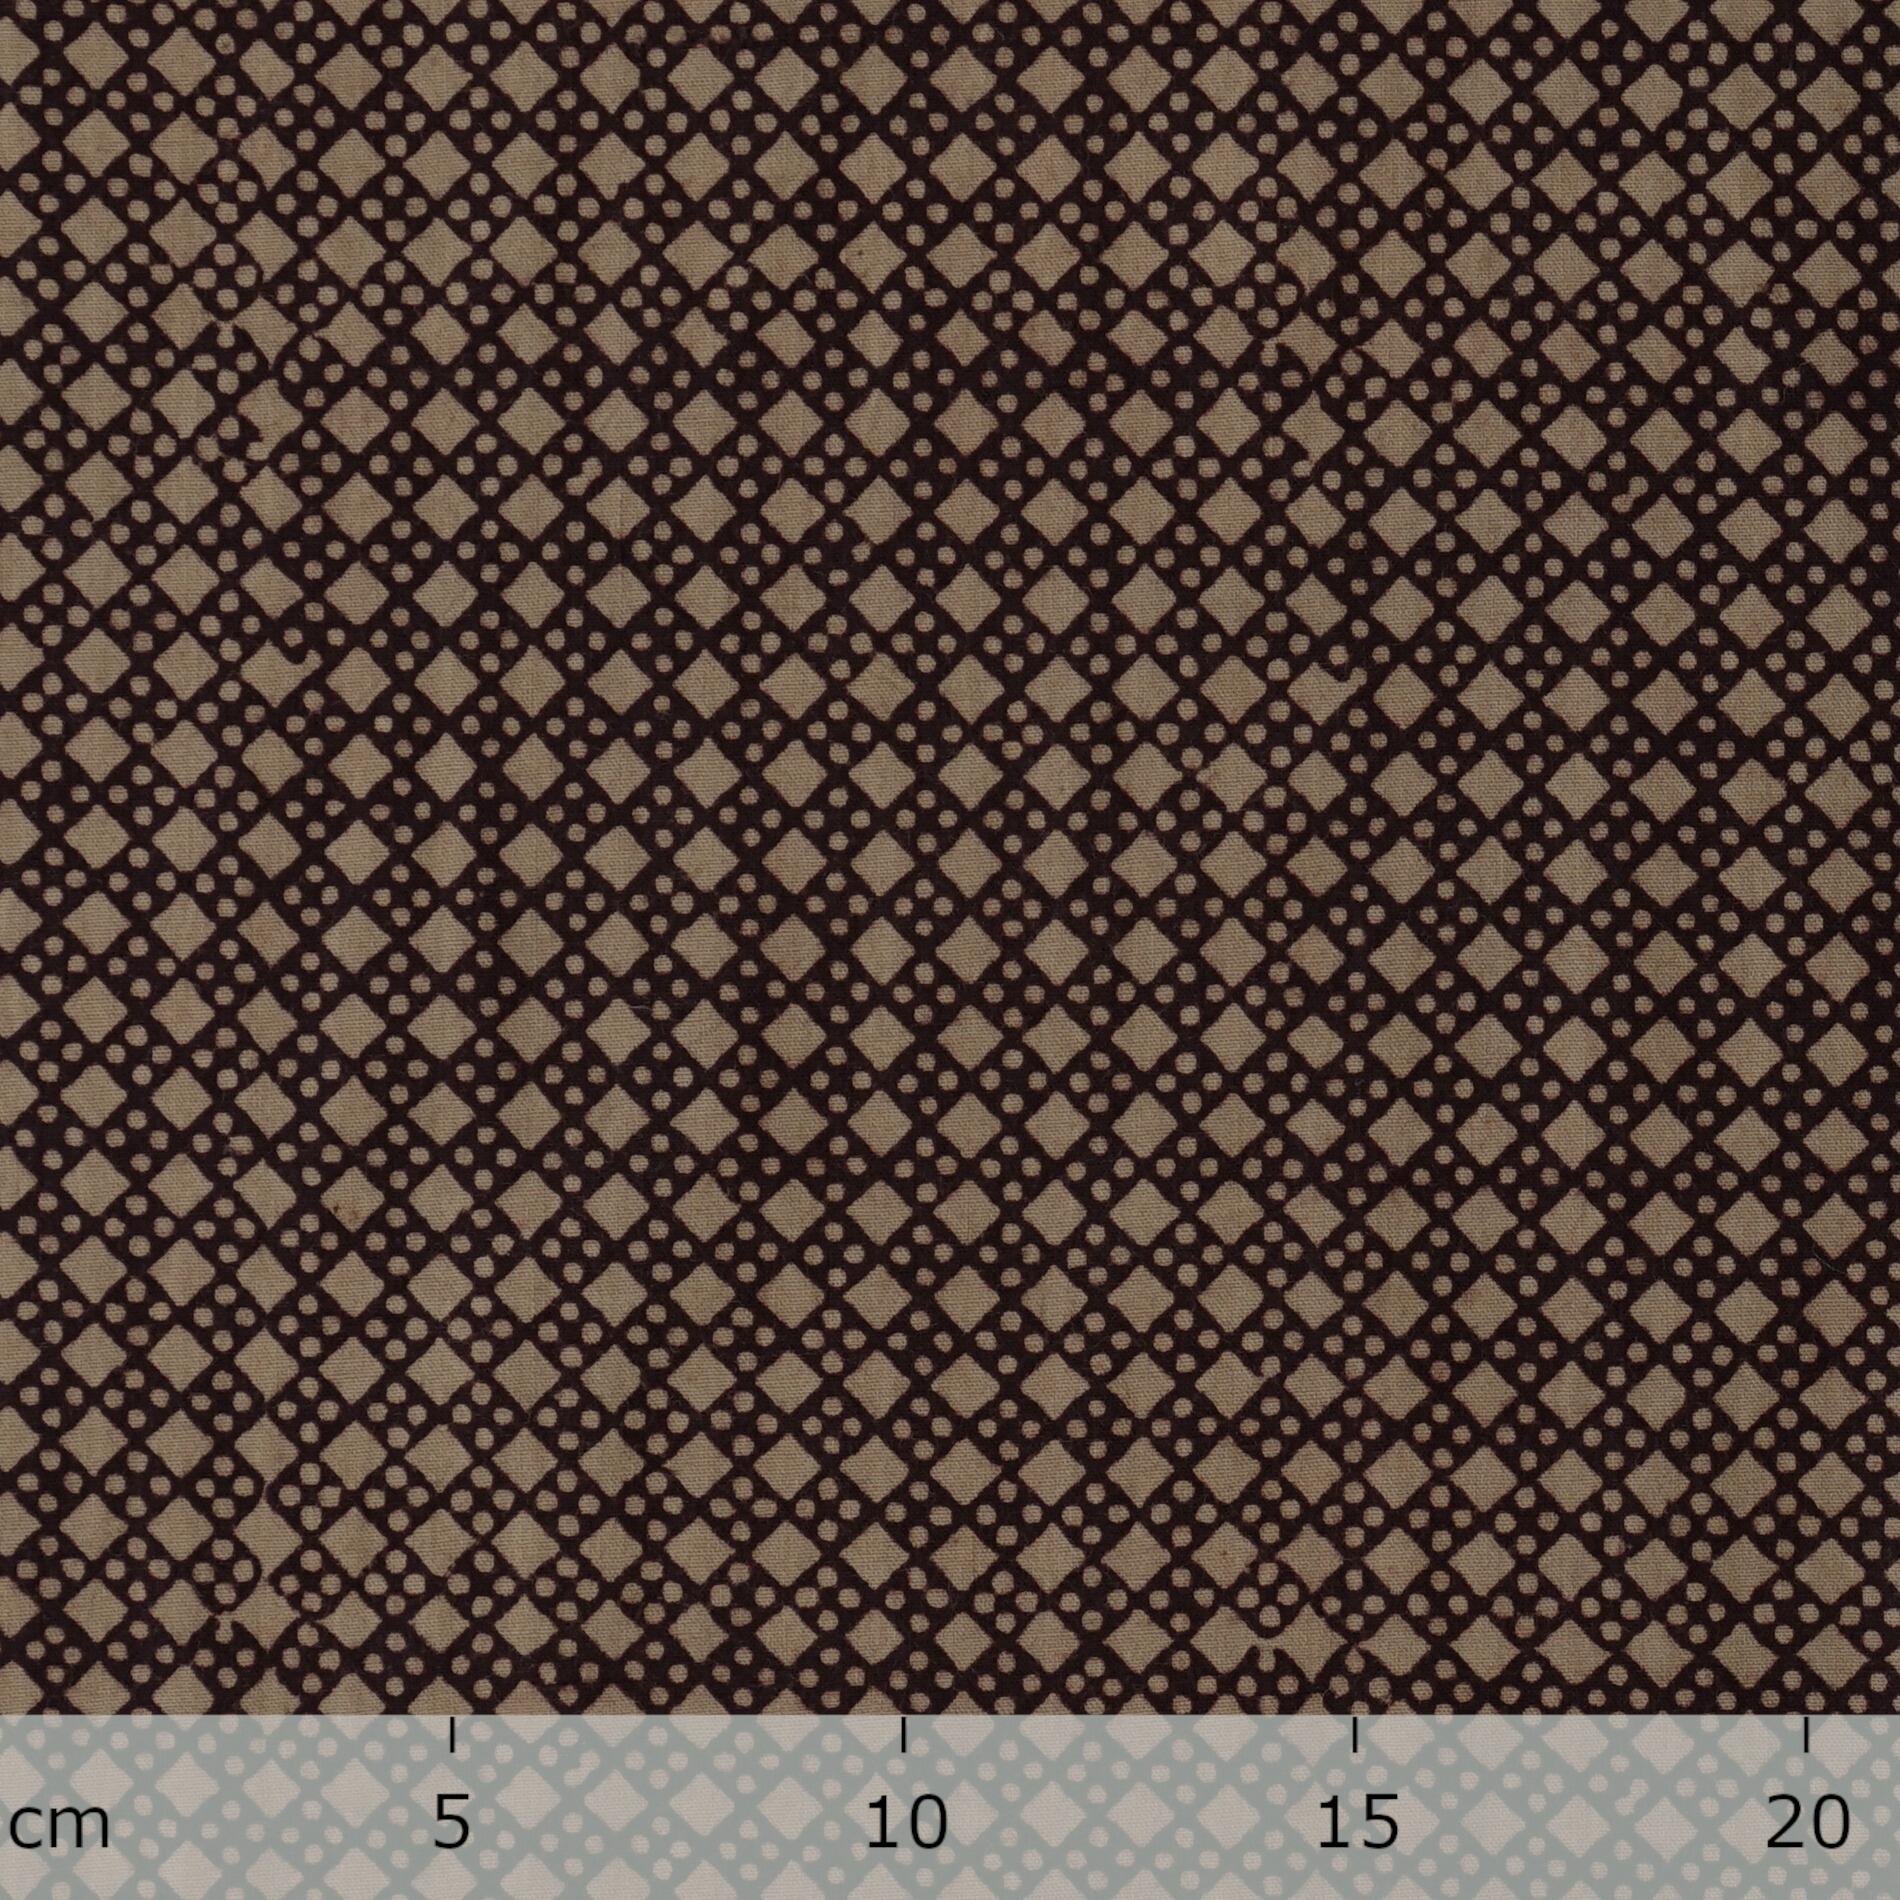 100% Block-Printed Cotton Fabric From India - Bagh Method - Iron Rust Black & Indigosol Khaki - Pressure Point Print - Ruler